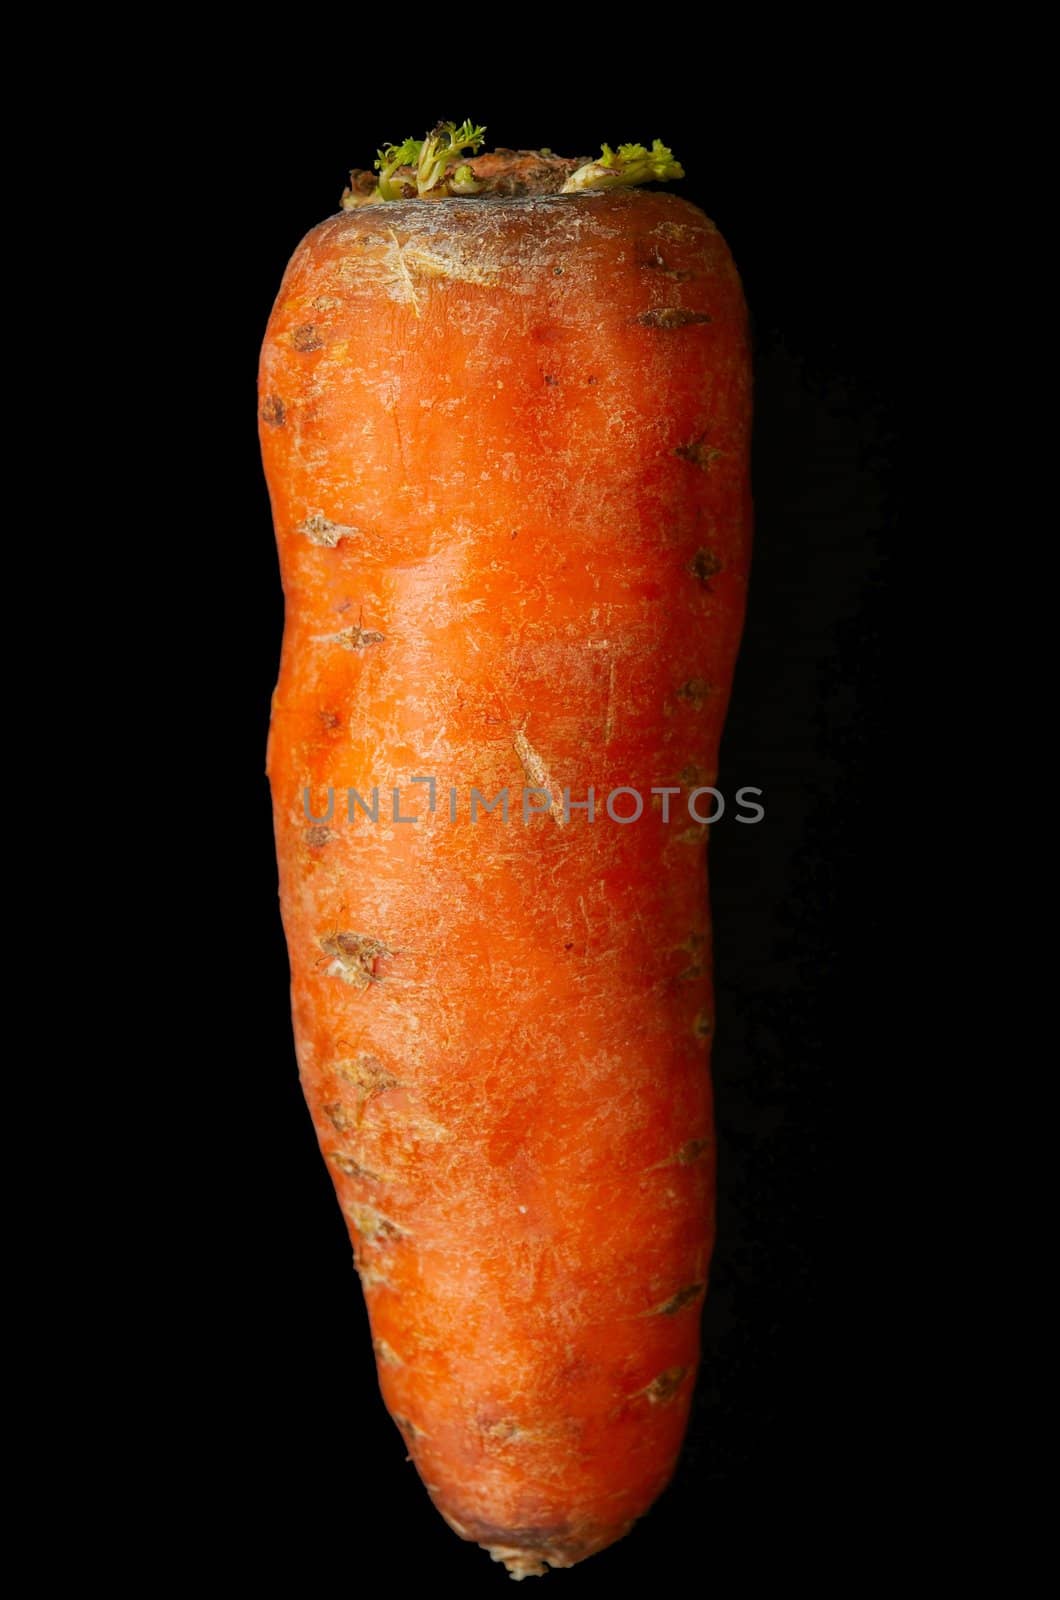 orange carrot against the black background